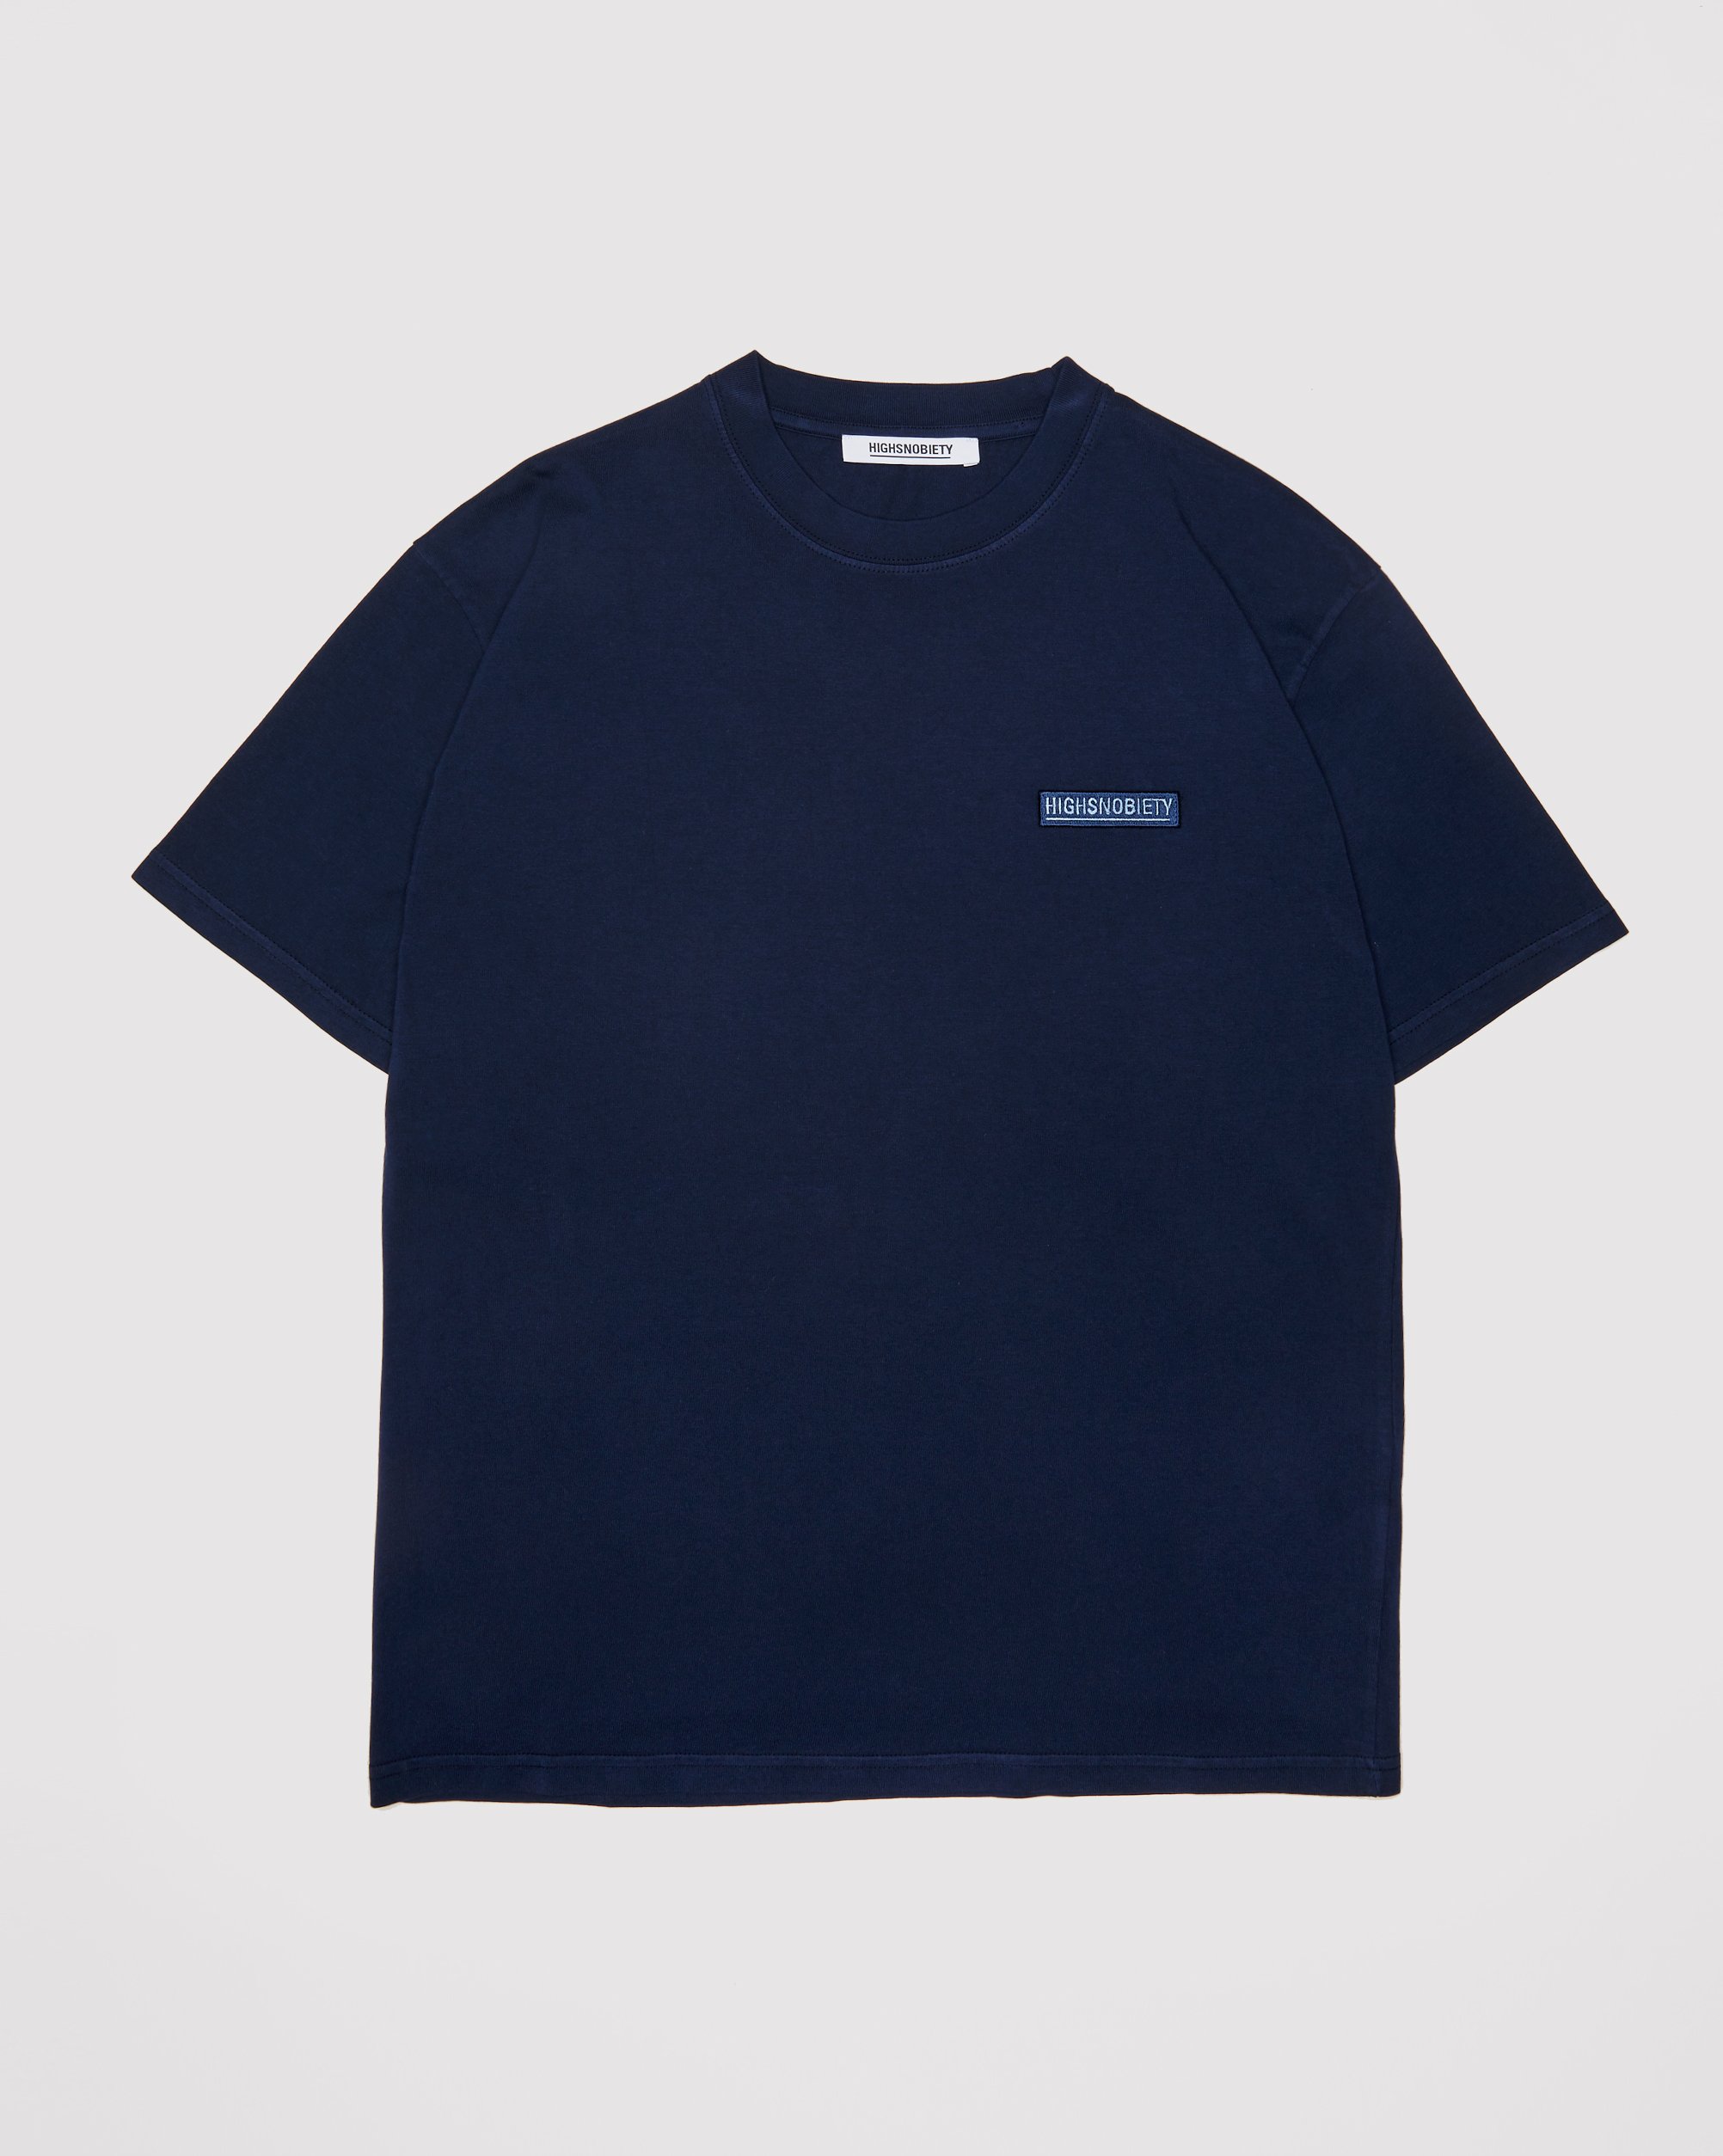 Highsnobiety - Staples T-Shirt Navy - Clothing - Blue - Image 1